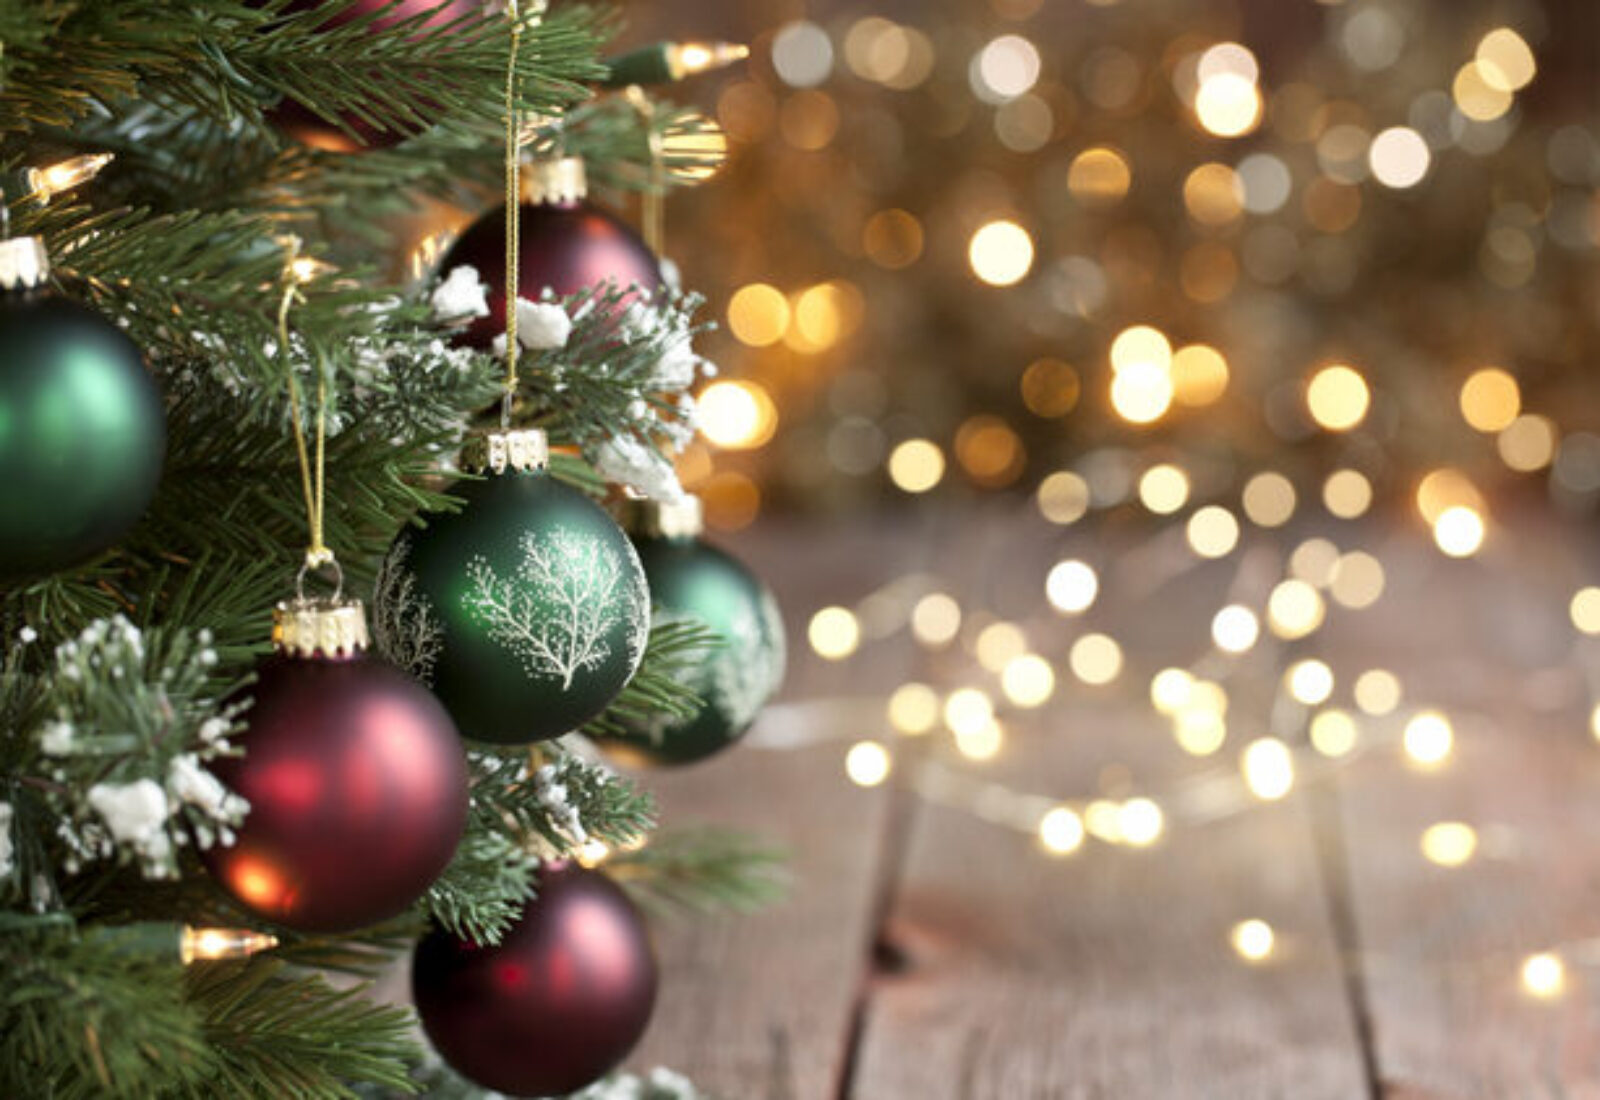 Join us for the Festive Christmas Tree Lighting!